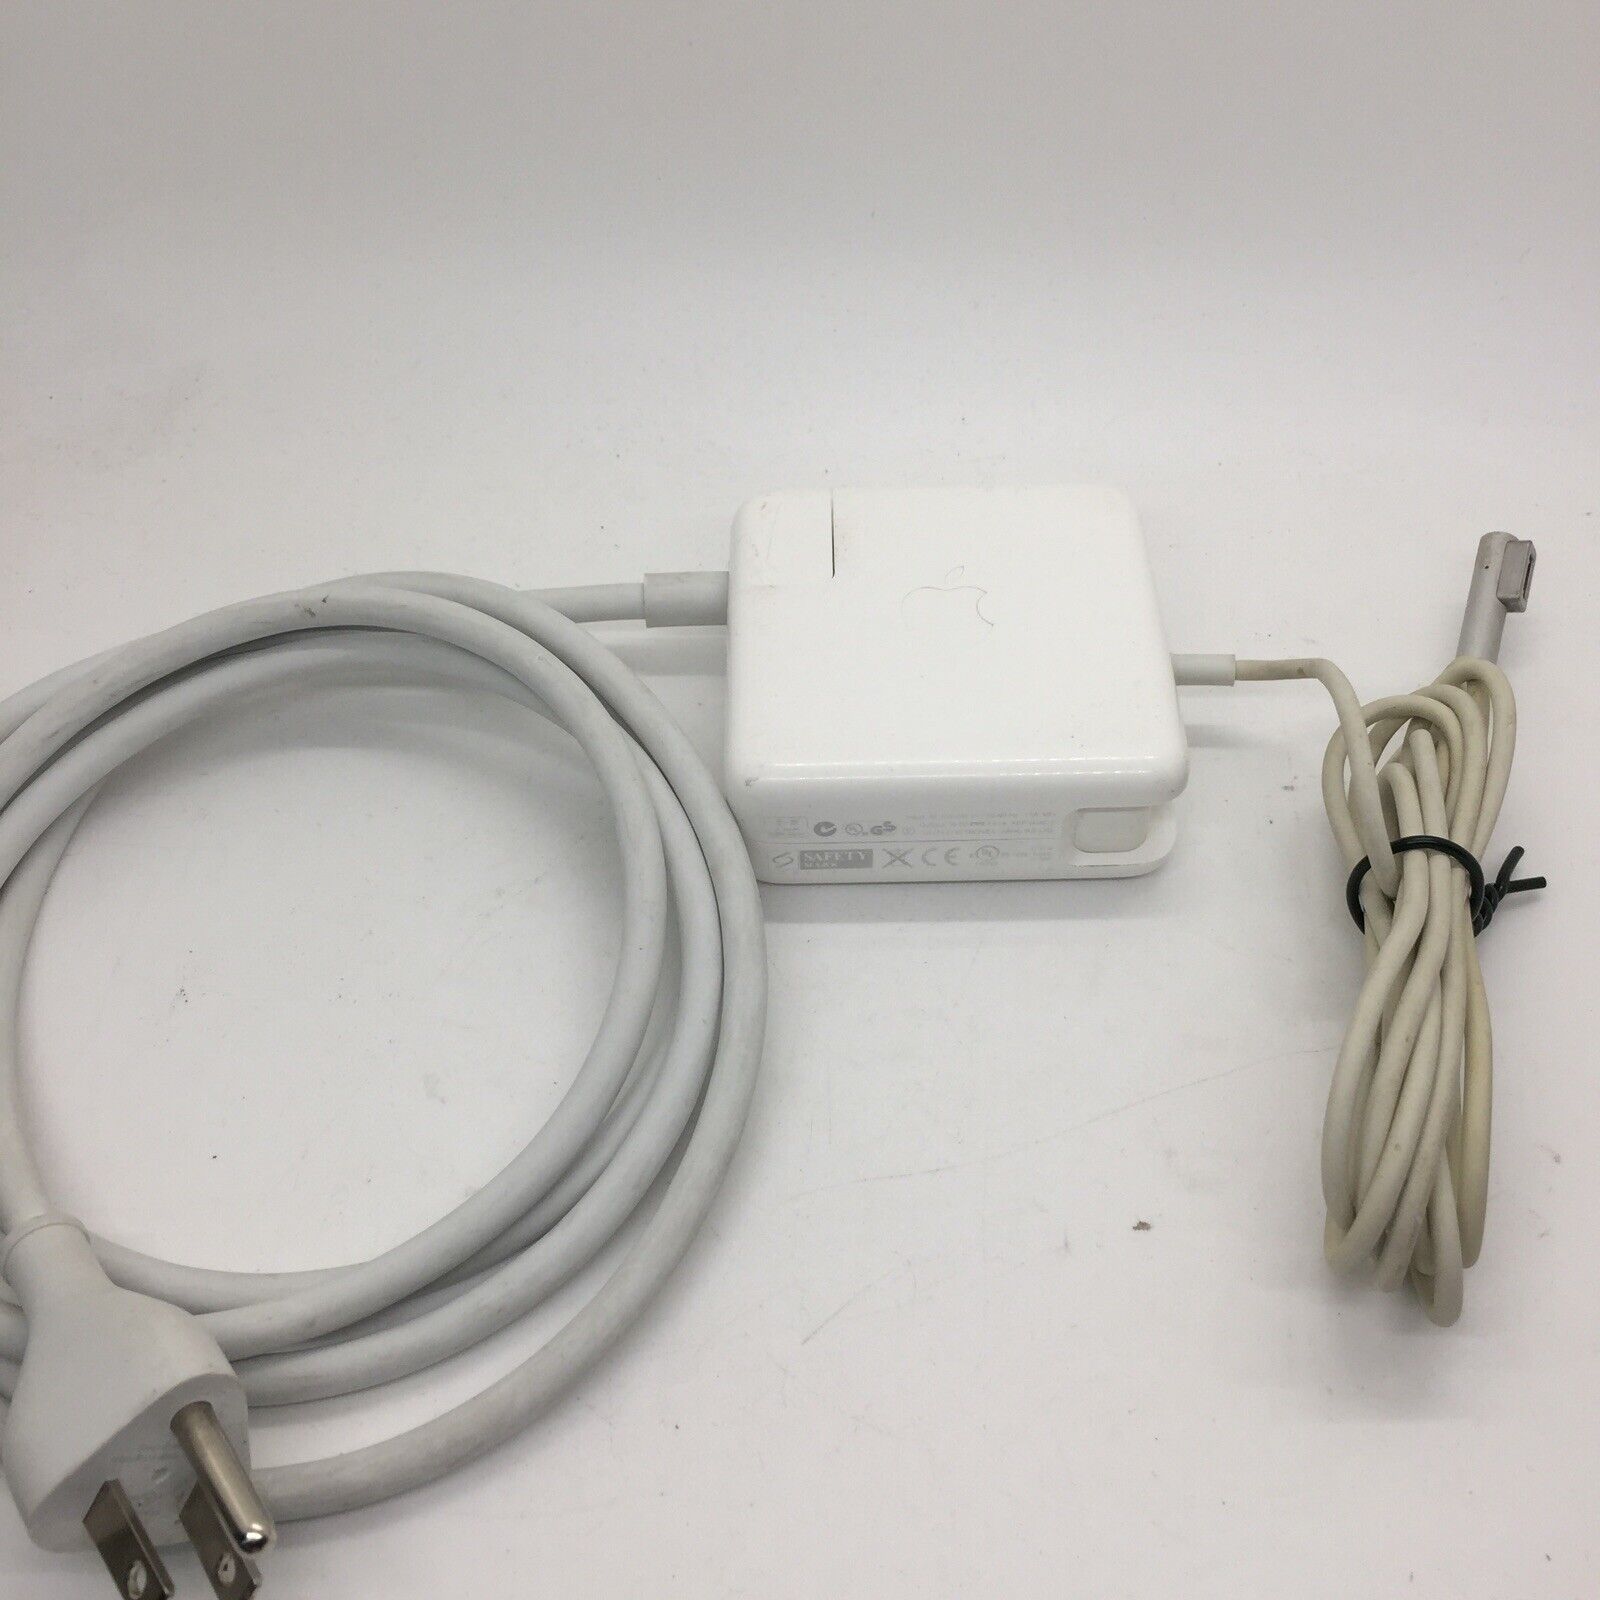 Original APPLE MacBook Pro 60W MagSafe Power Adapter Charger A1184 A1330 A1344